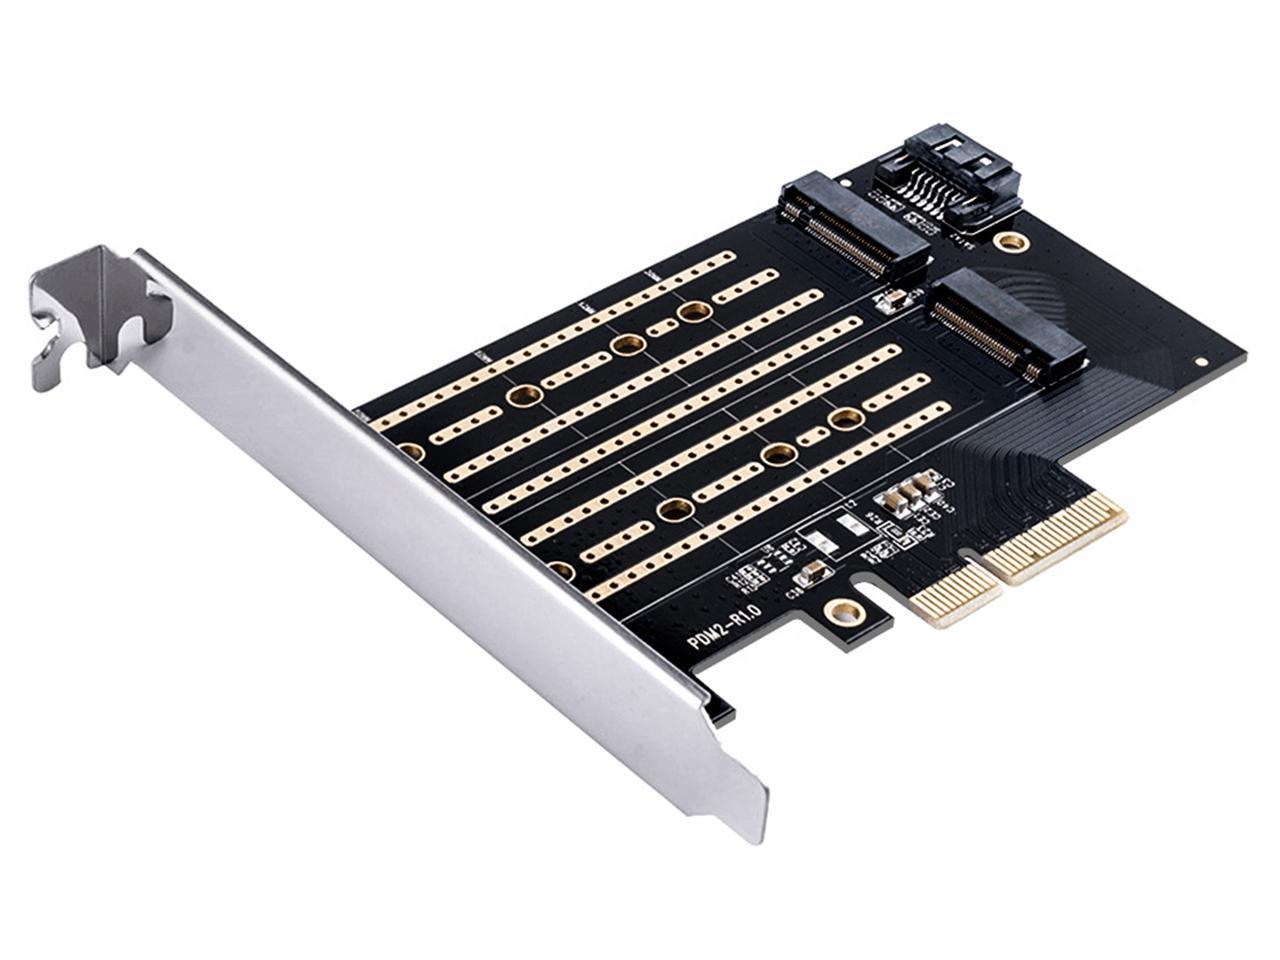 ORICO .2 PCIe Adapter NVe & SATA Dual Protocol, 2 NVe SSD to PCI-e .